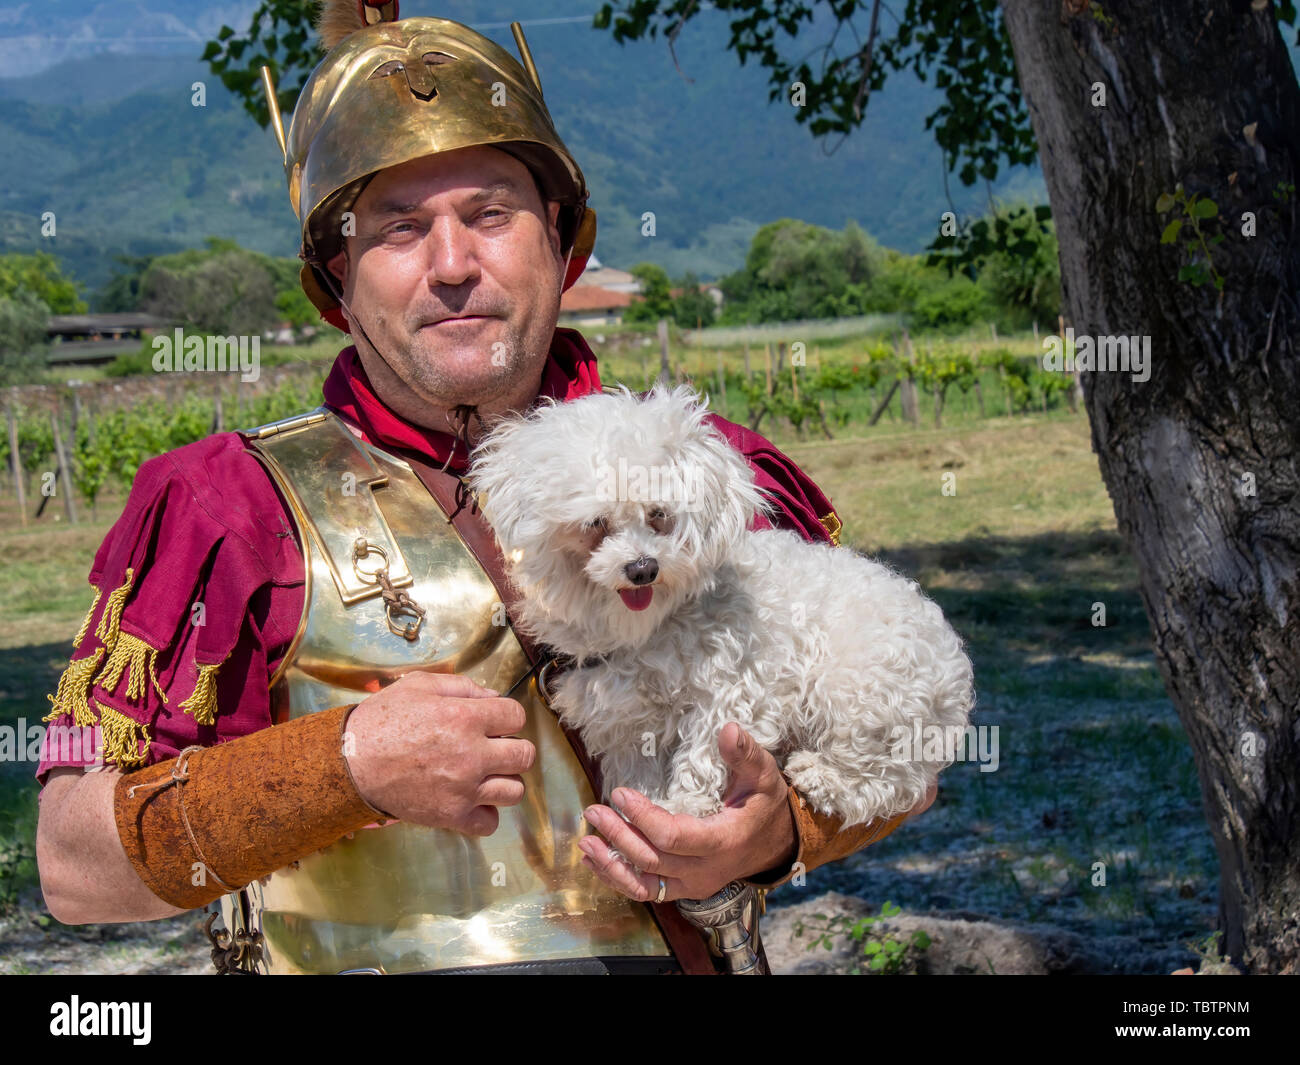 LUNI, MASSA CARRARA, ITALY – JUNE 2, 2019: Community event, Ancient Rome reenactment near Portus Lunae, genuine ancient settlement. Centurian and dog. Stock Photo